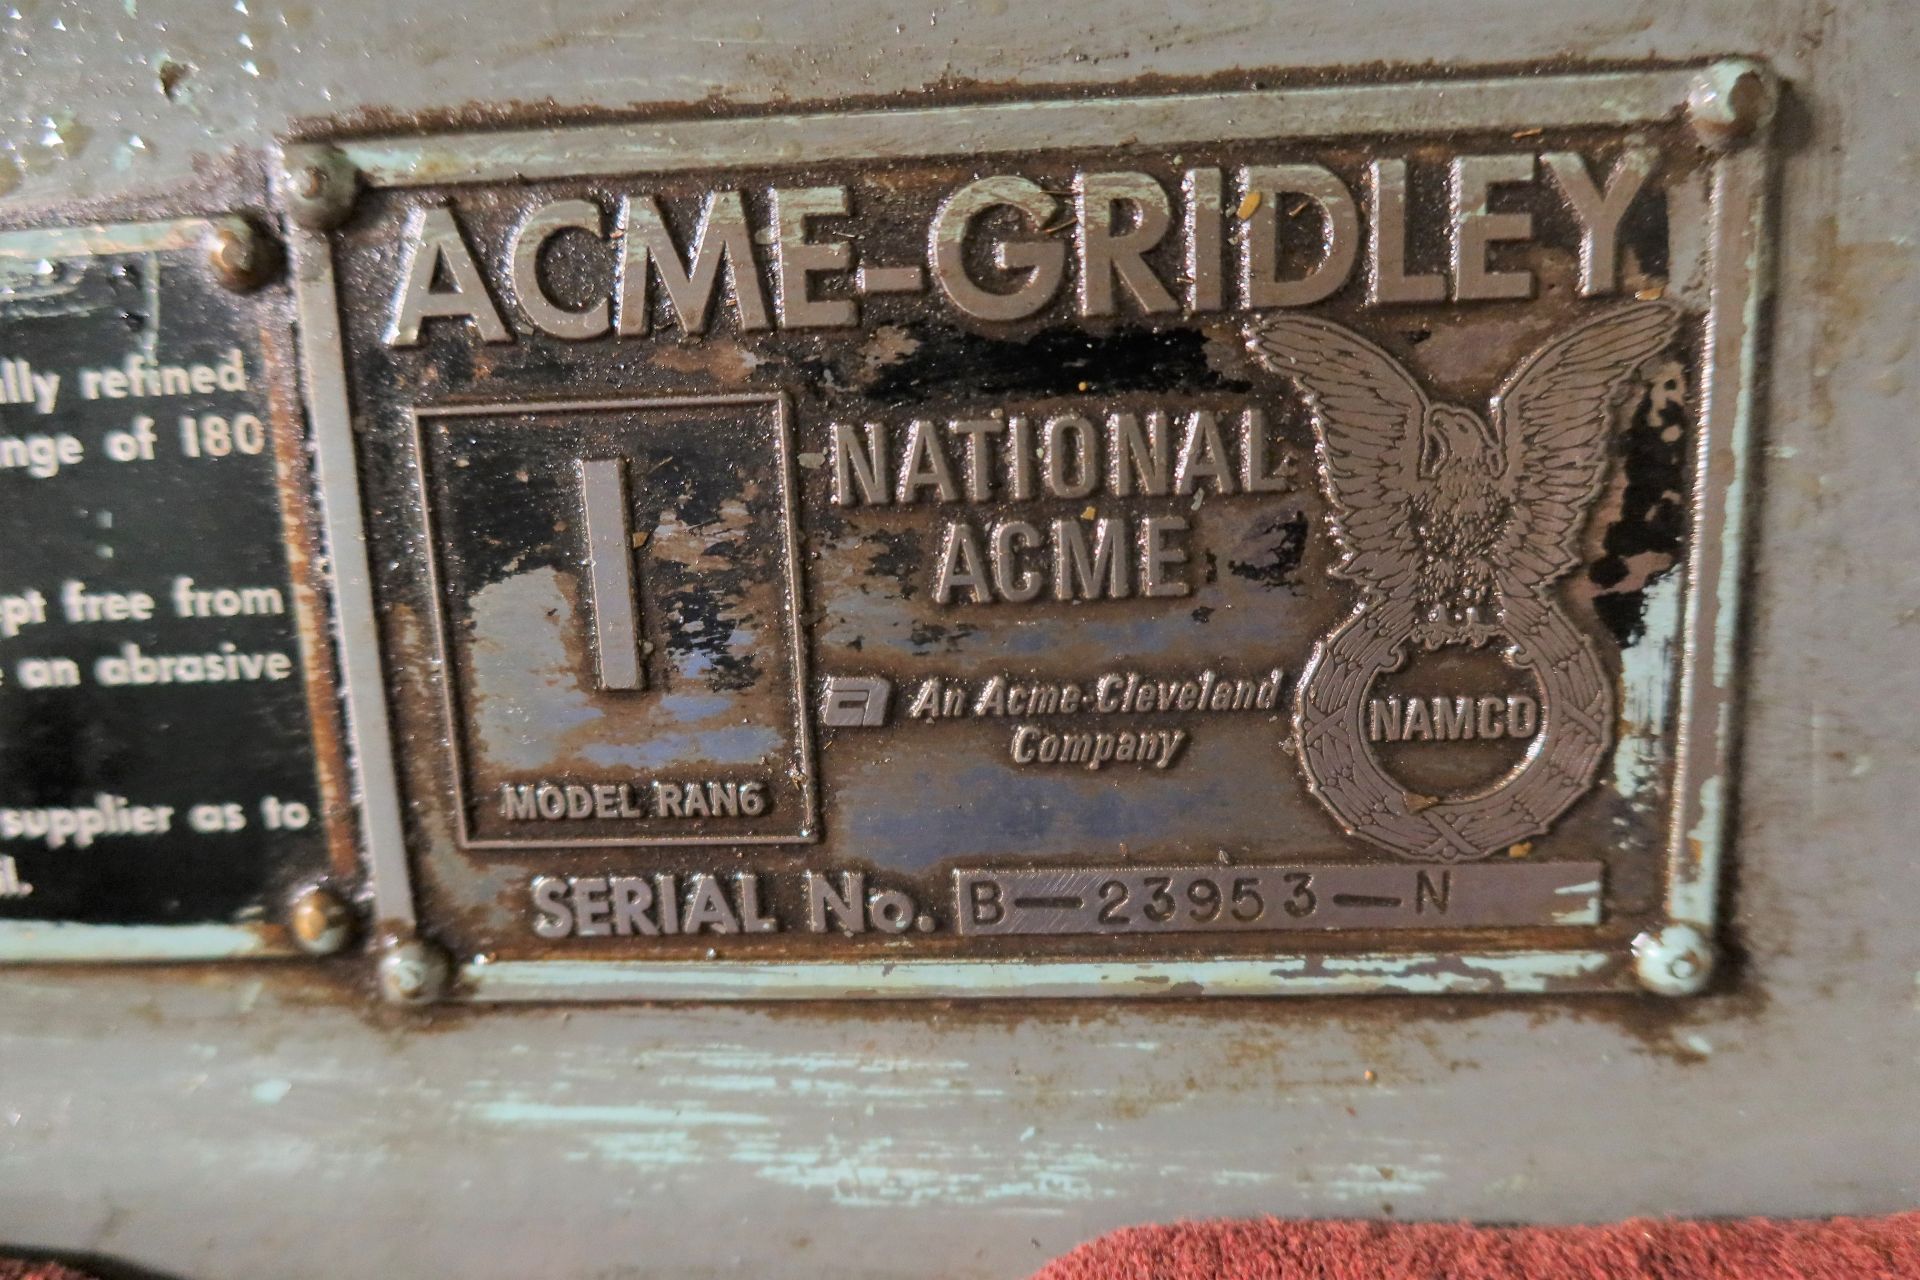 1" NATIONAL ACME MODEL RAN-6 6-SPINDLE AUTOMATIC BAR (SCREW) MACHINE, S/N B23953-N, NEW 1973 - Image 5 of 5